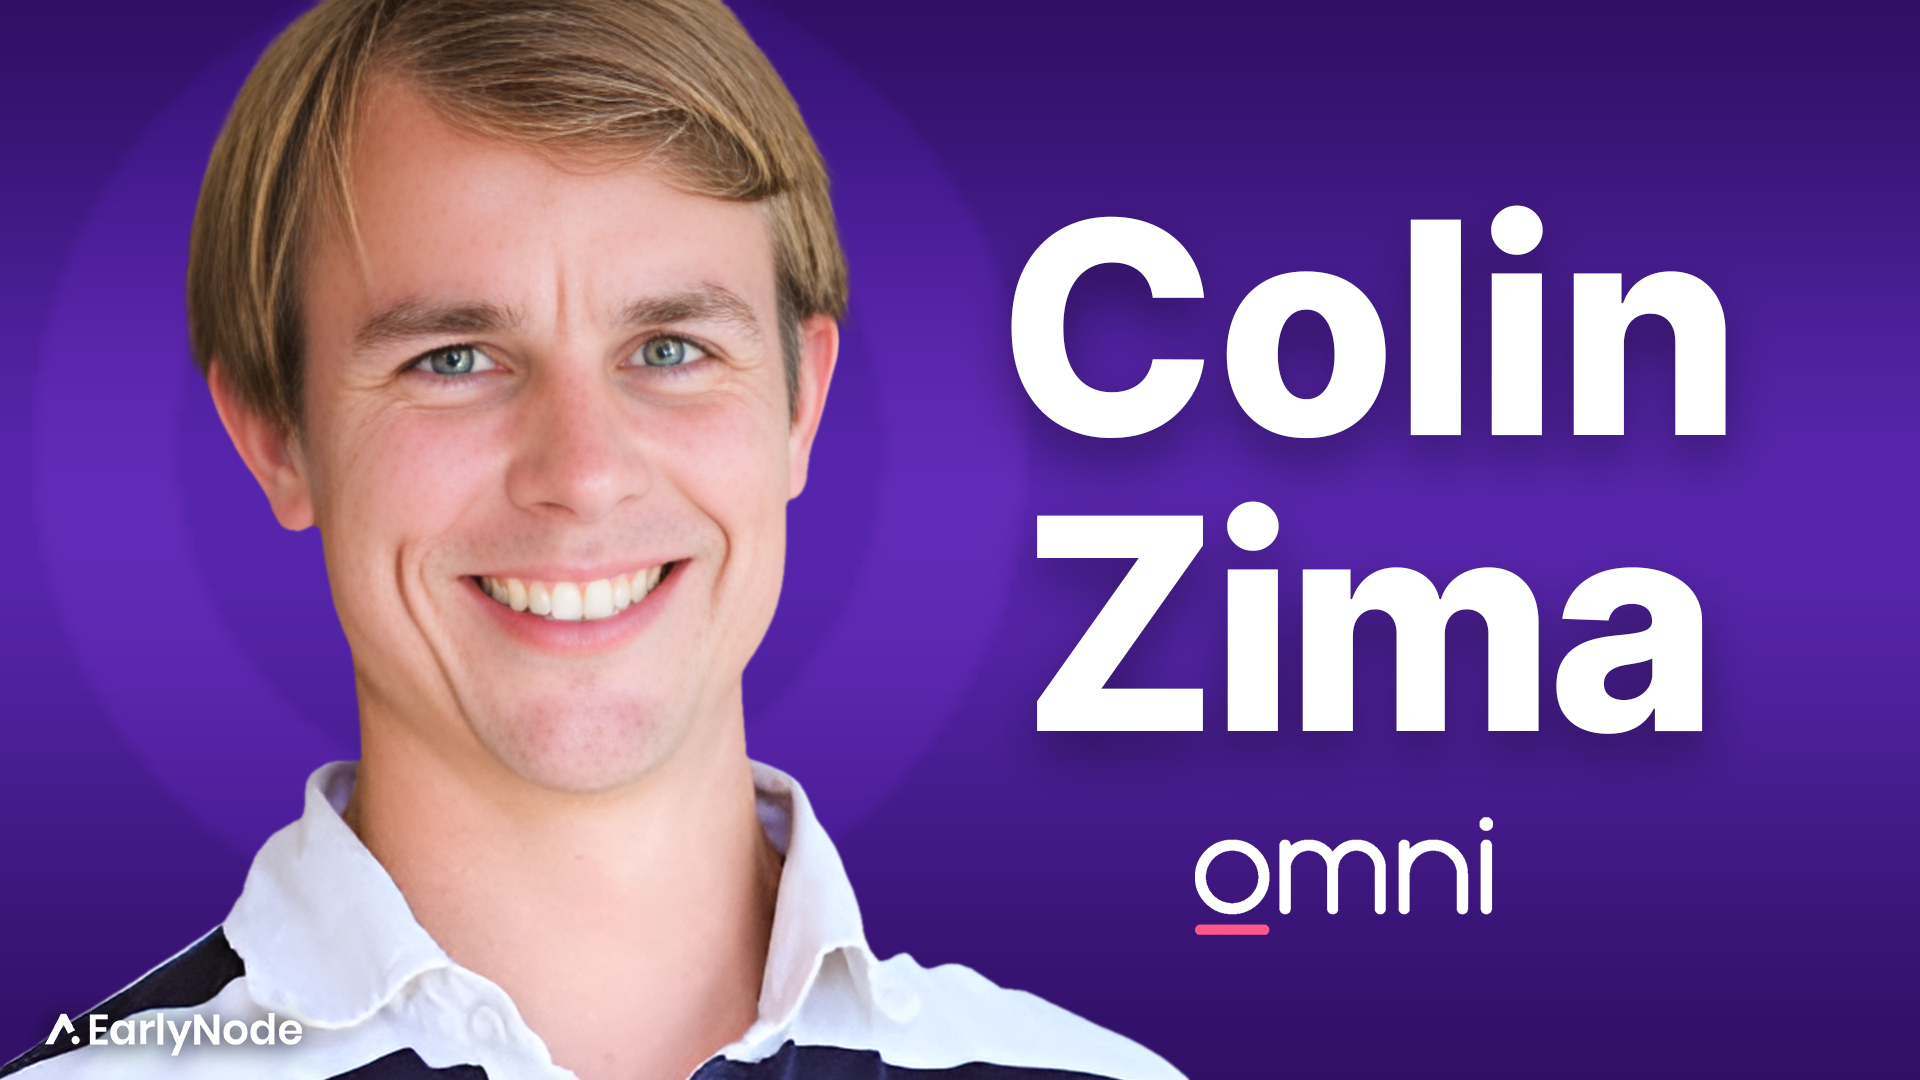 Disrupting the $30 Billion BI market with Omni’s Founder Colin Zima